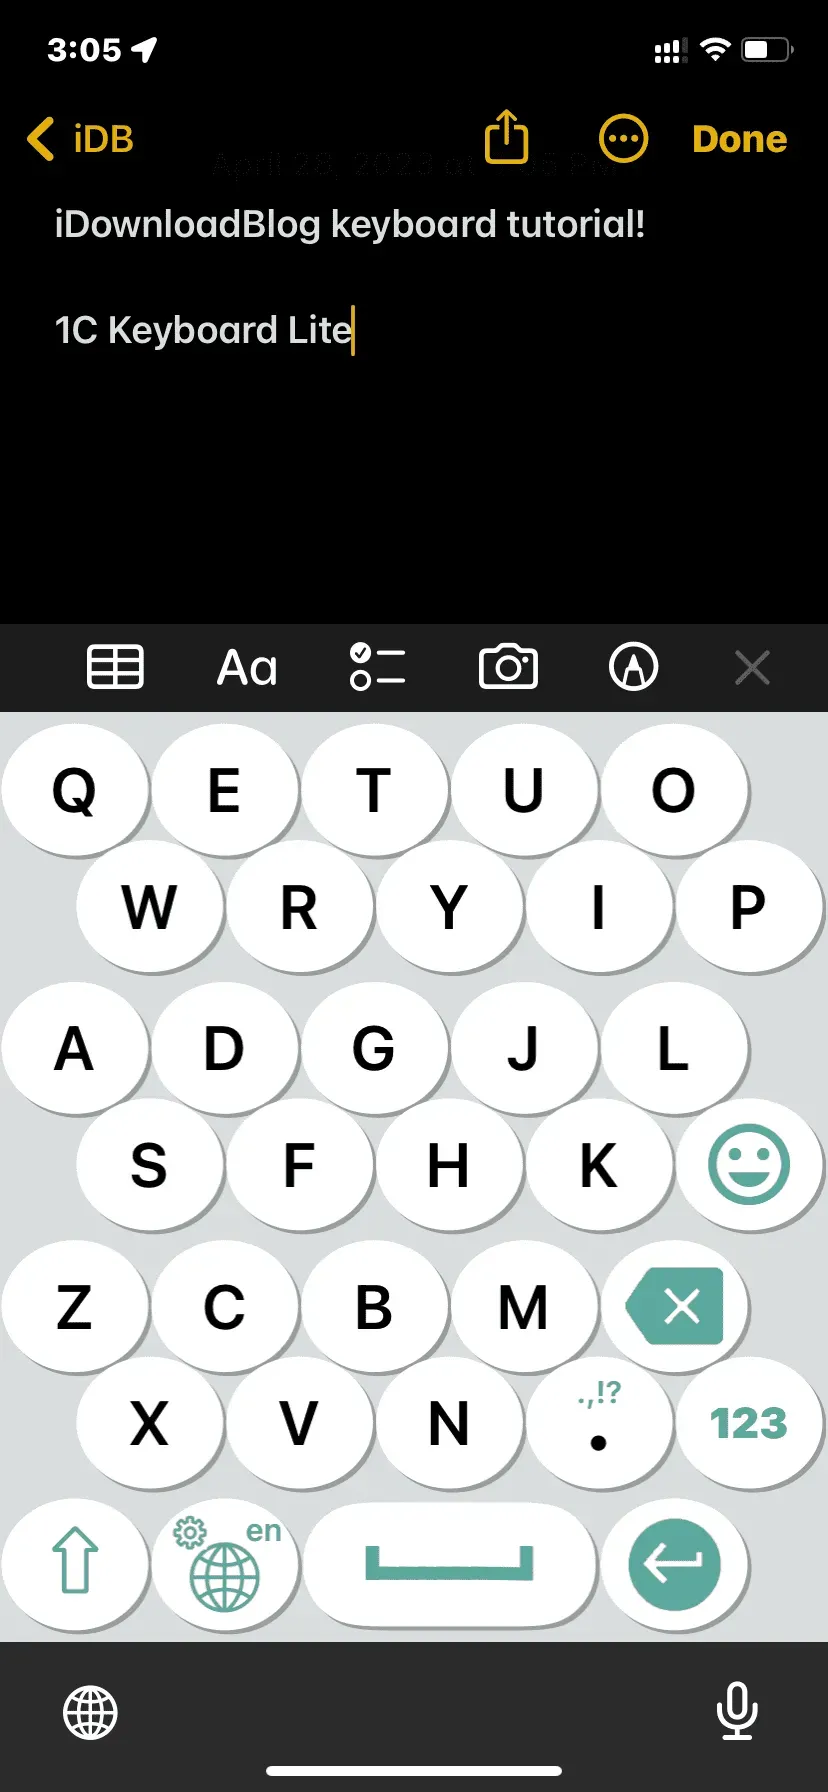 Enorme teclado 1C Keyboard Lite no iPhone